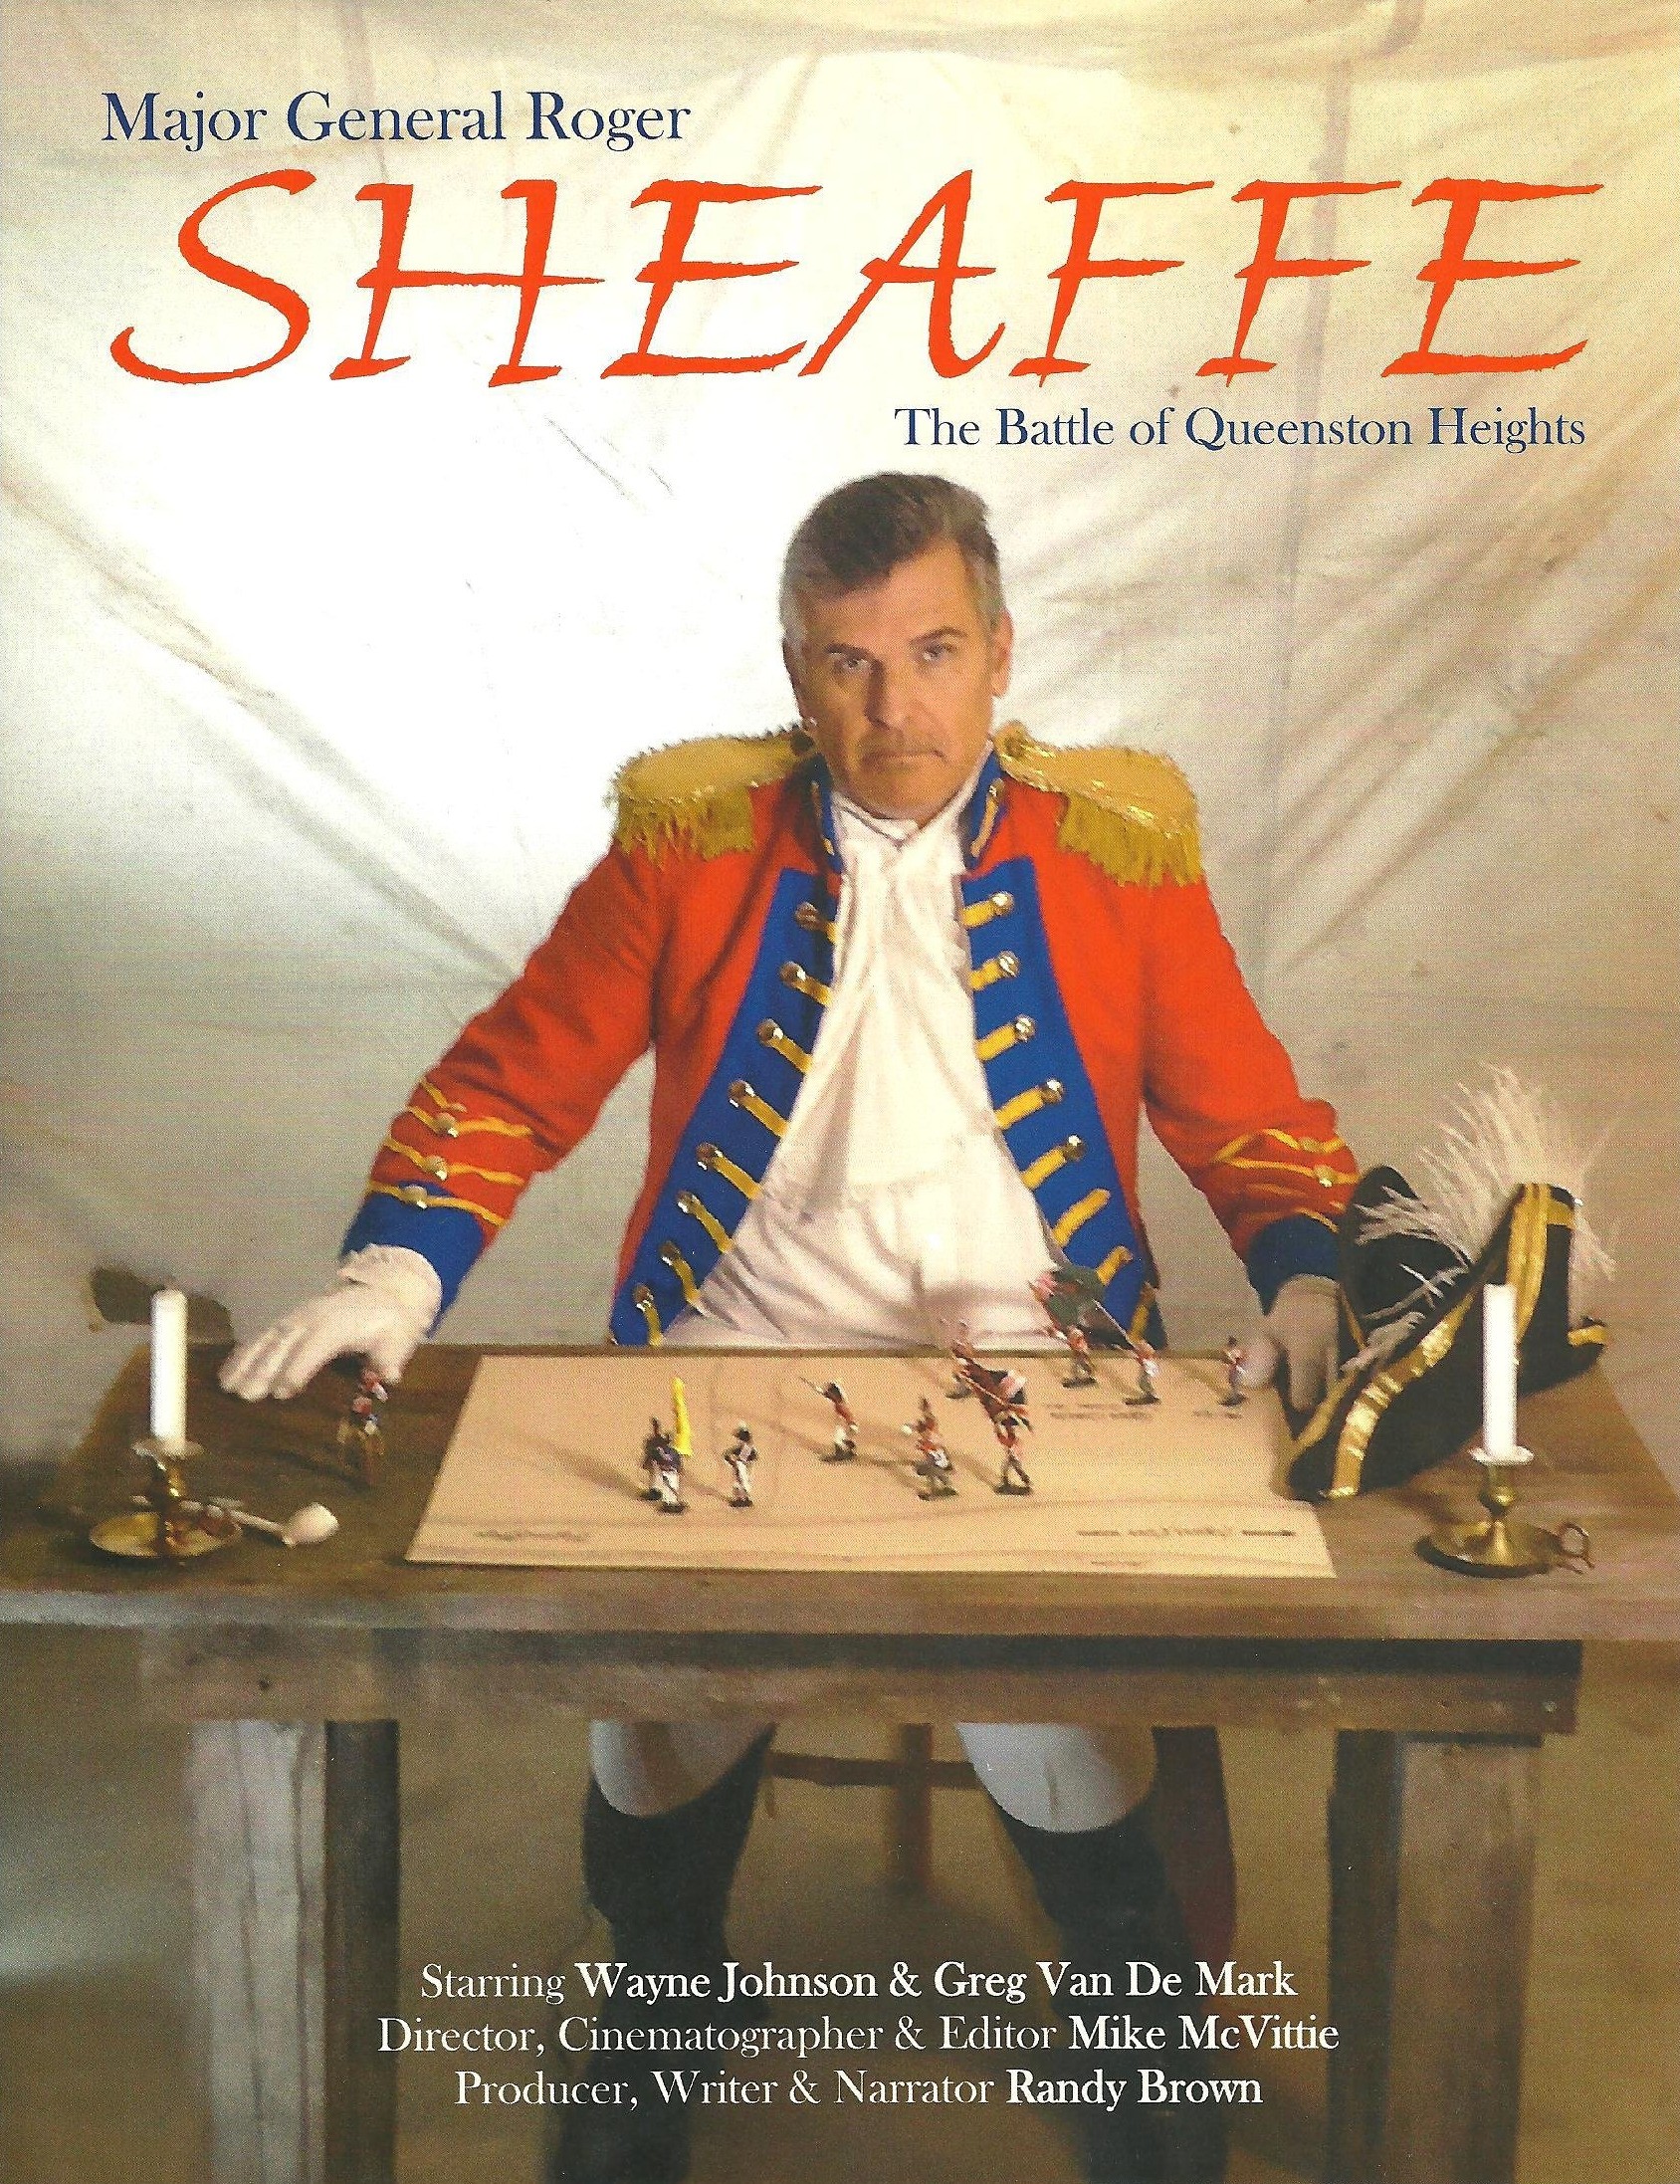 Mega Sized Movie Poster Image for Major General Roger Sheaffe